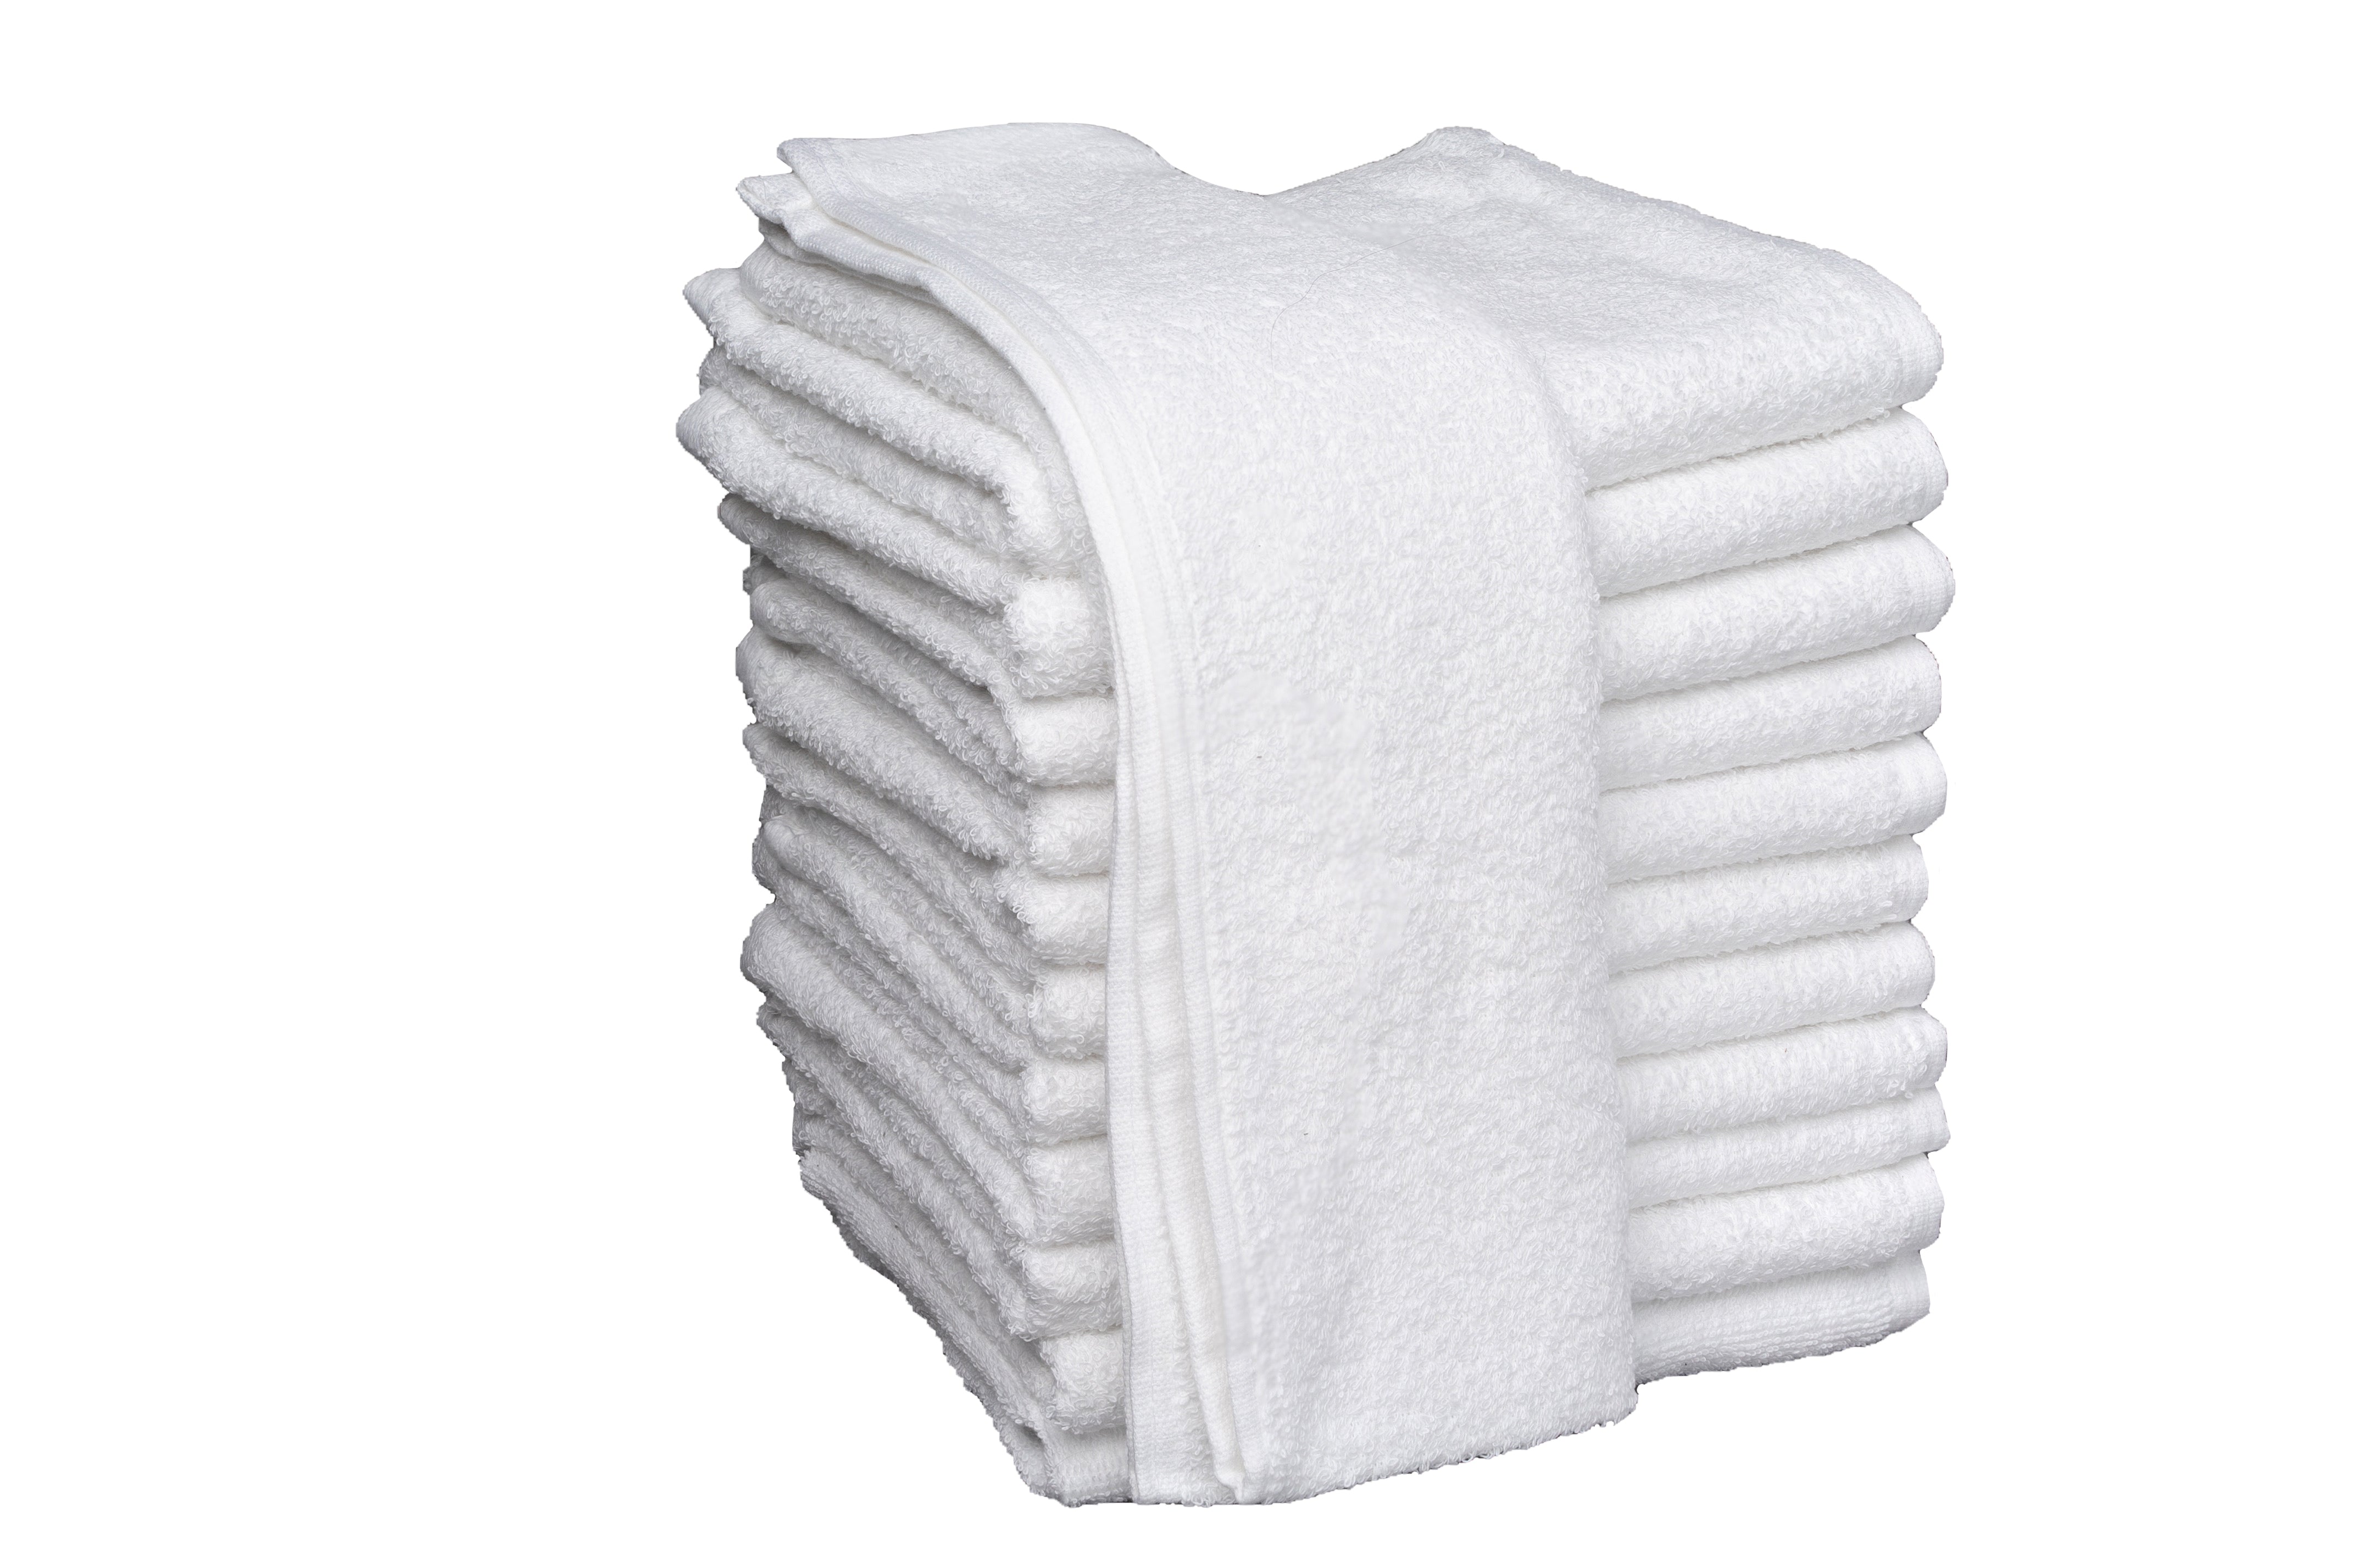 Partex dlux3™ Towels